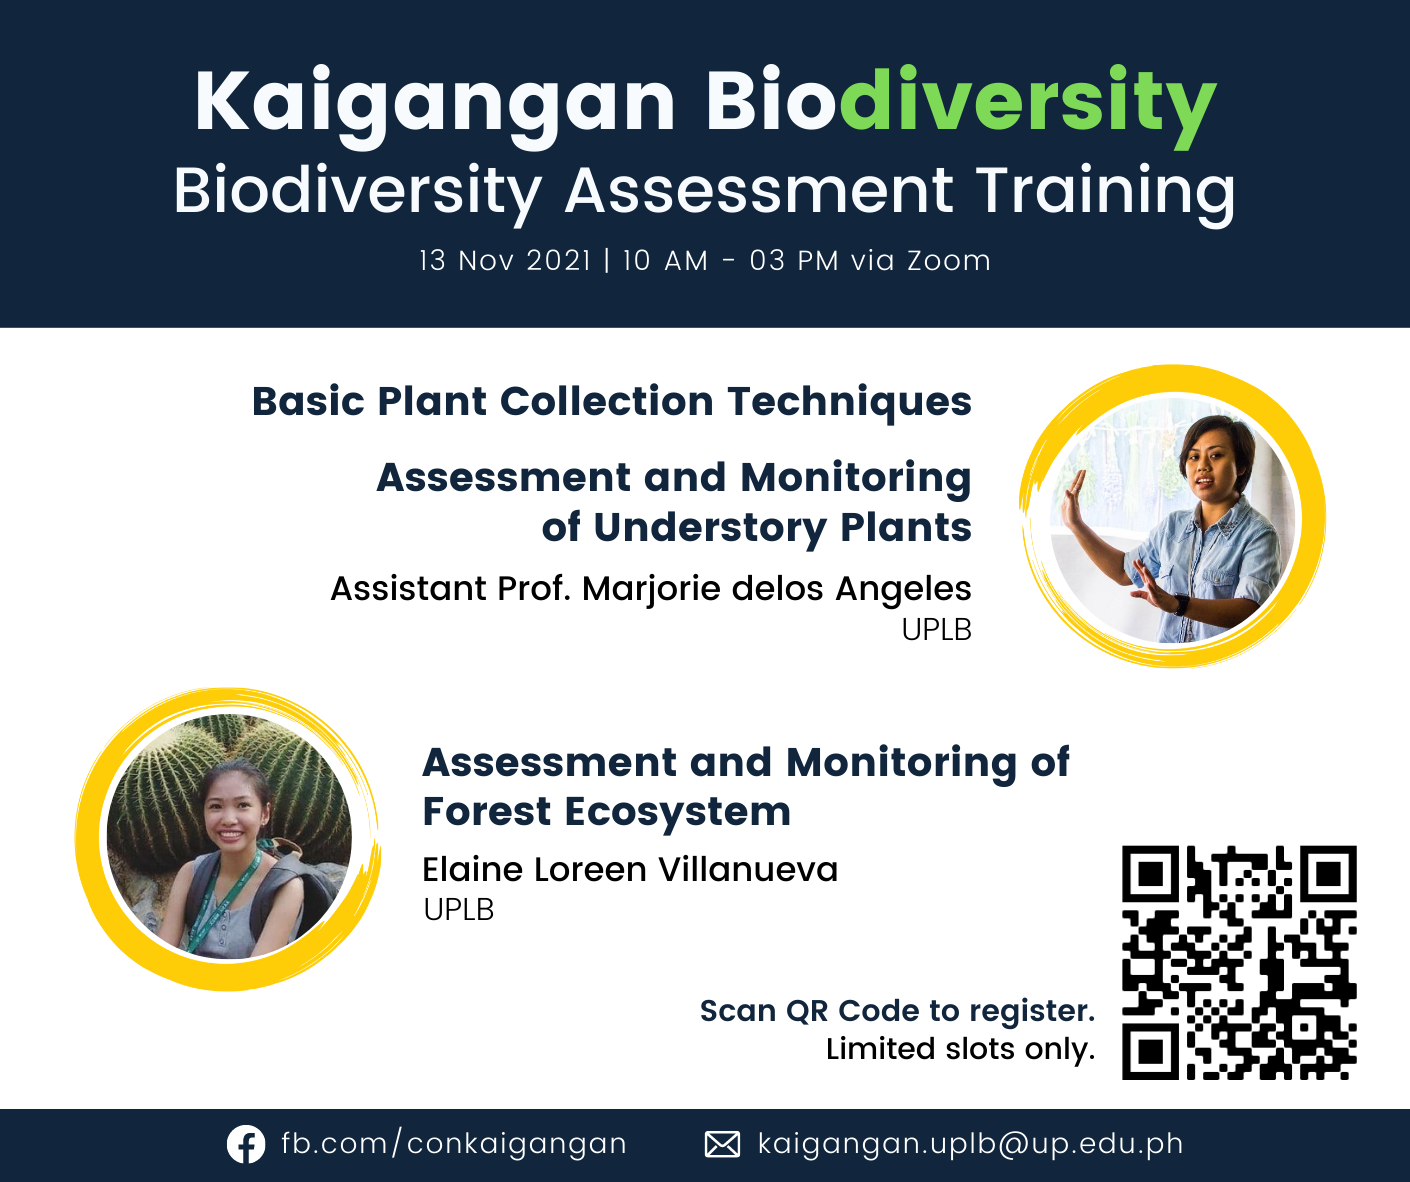 CONserve-KAIGANGAN organizes its first Online Biodiversity Training